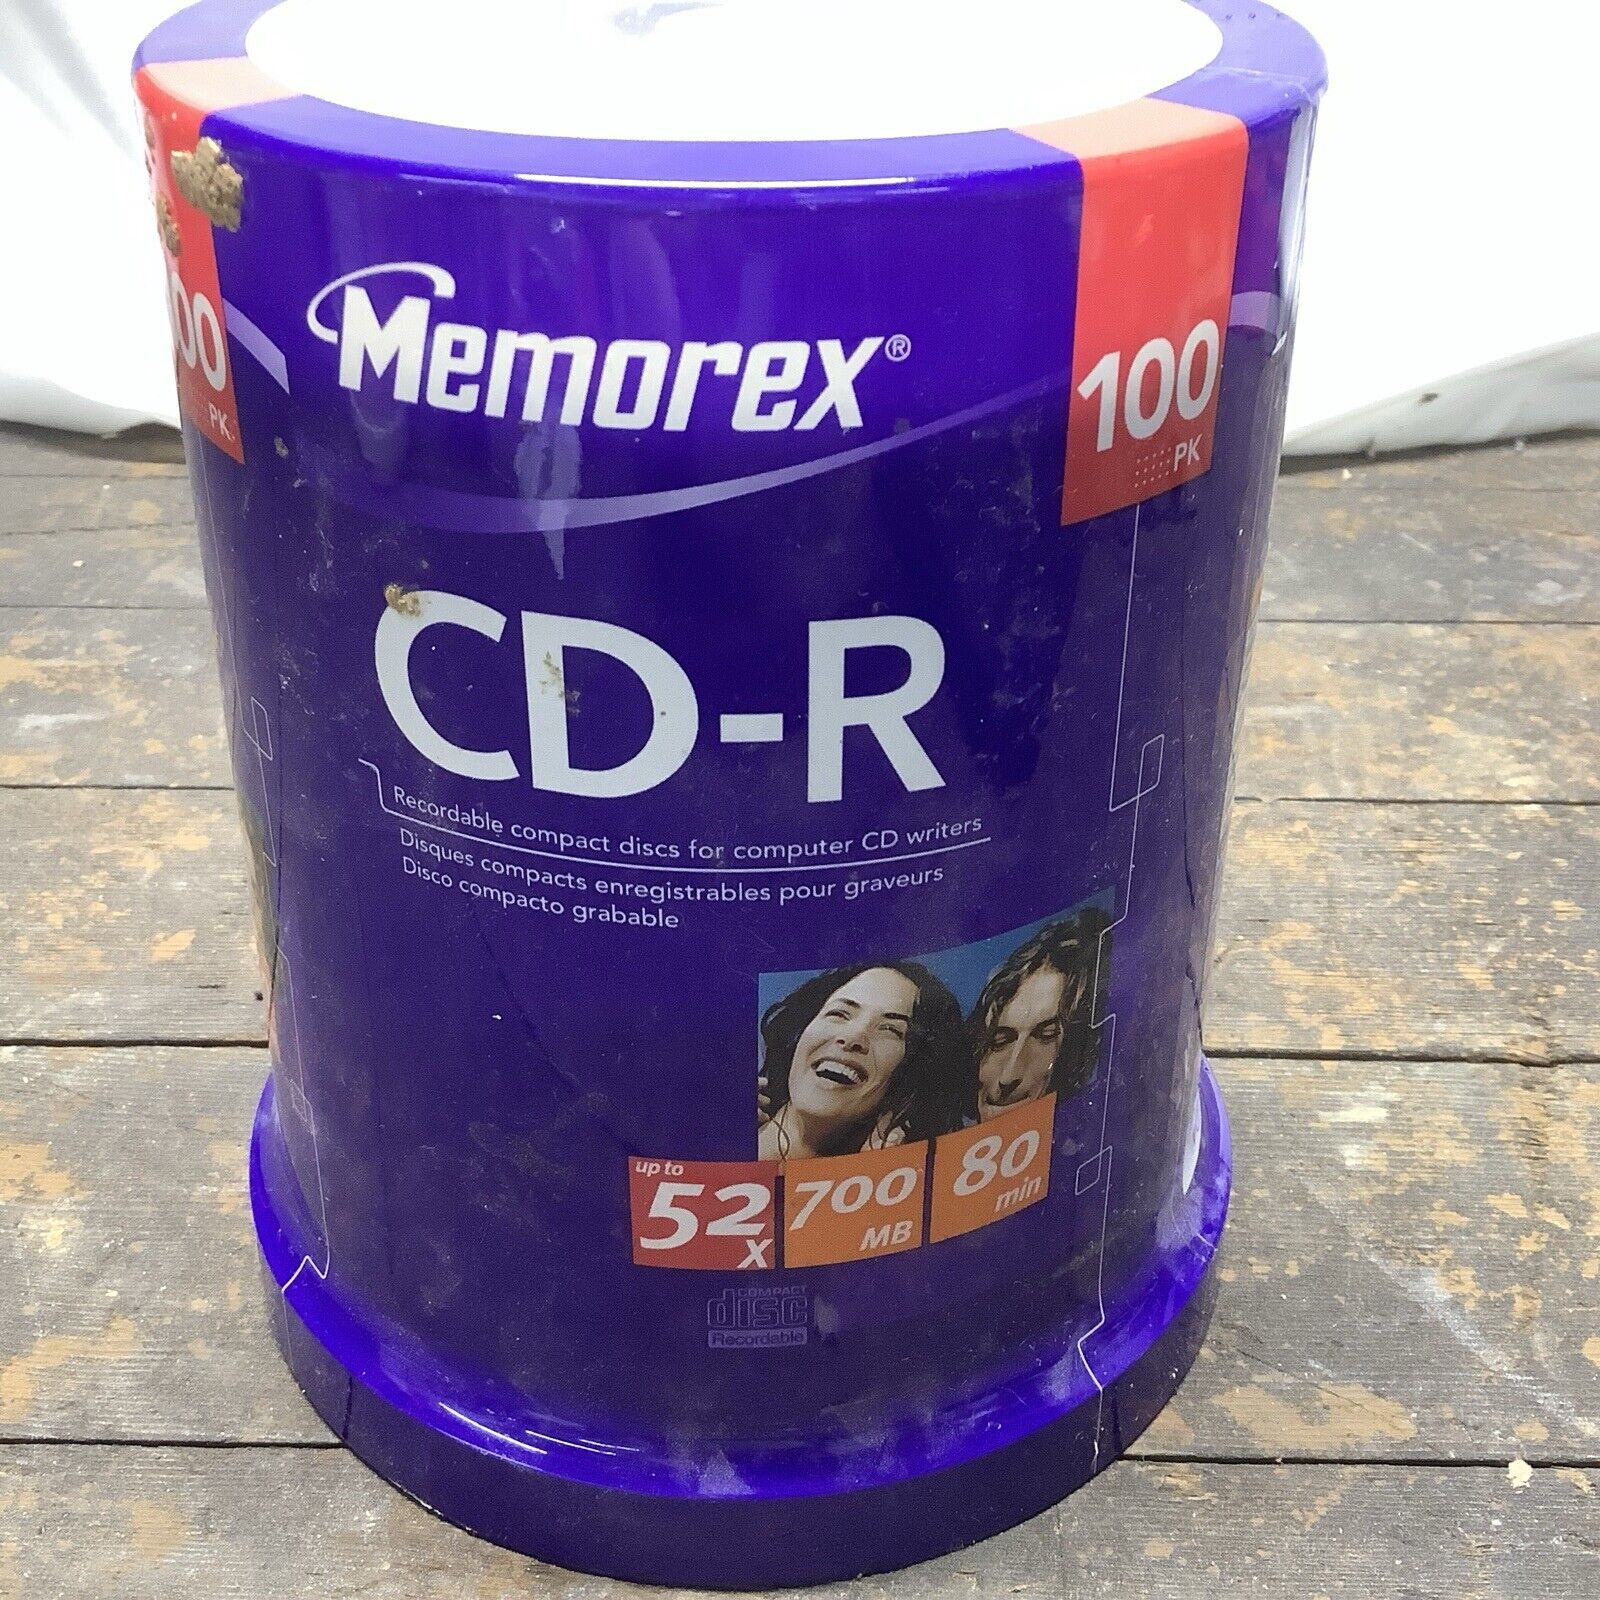 Memorex CD-R 52x 700MB 80-Minute 100 Pack Sealed  BRAND NEW IN PACKAGE 100 PACK